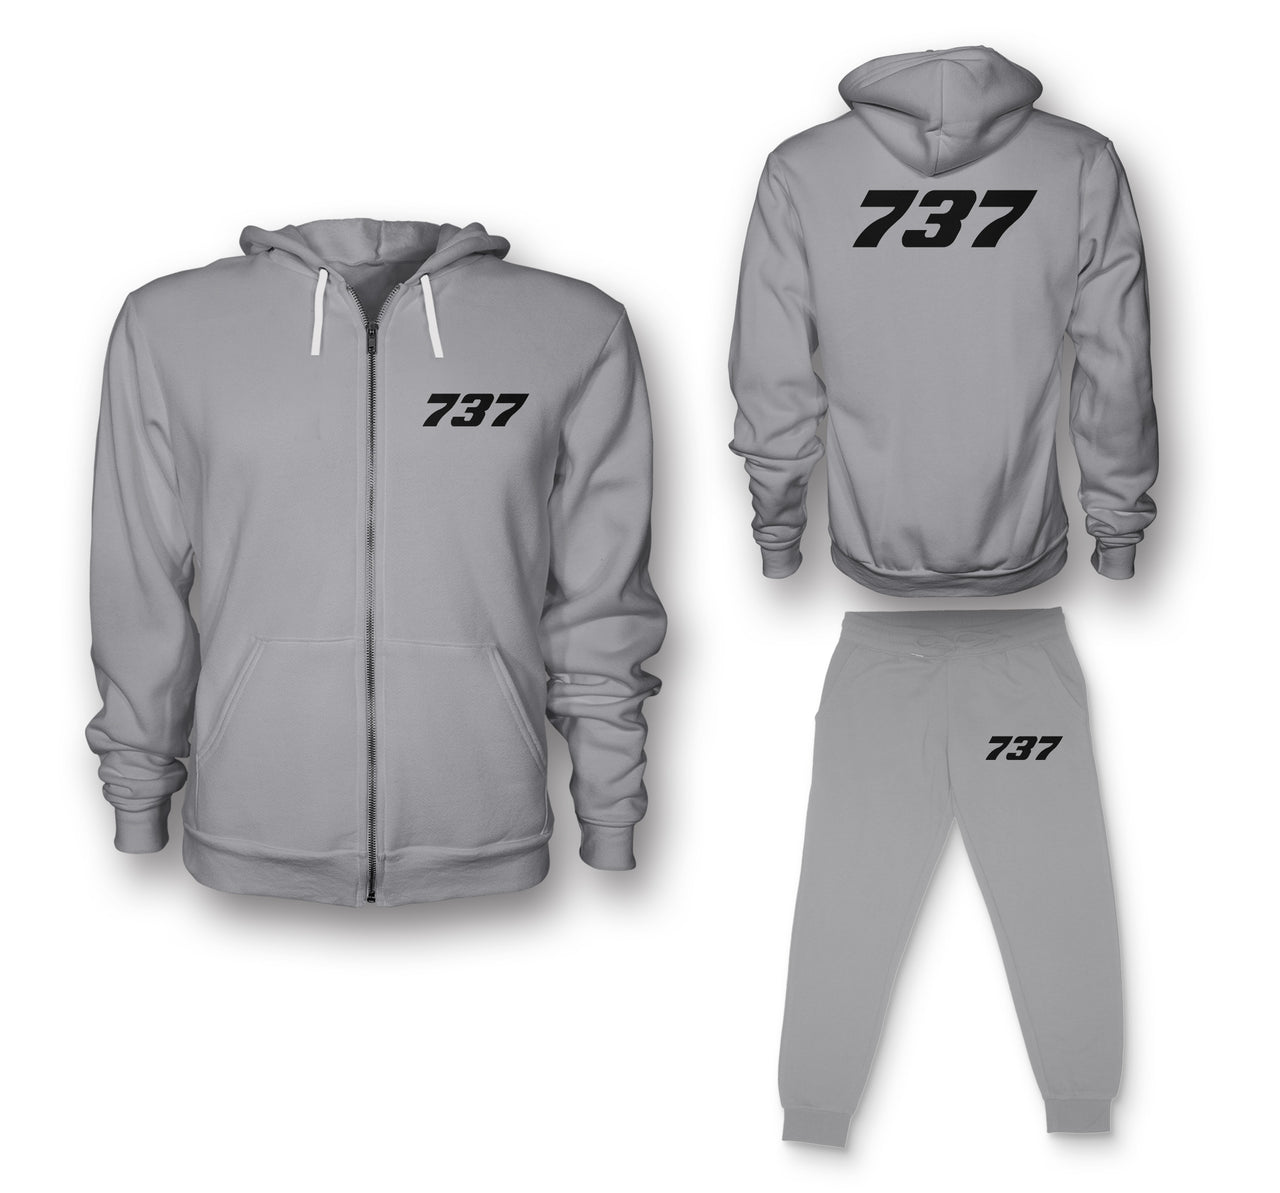 737 Flat Text Designed Zipped Hoodies & Sweatpants Set